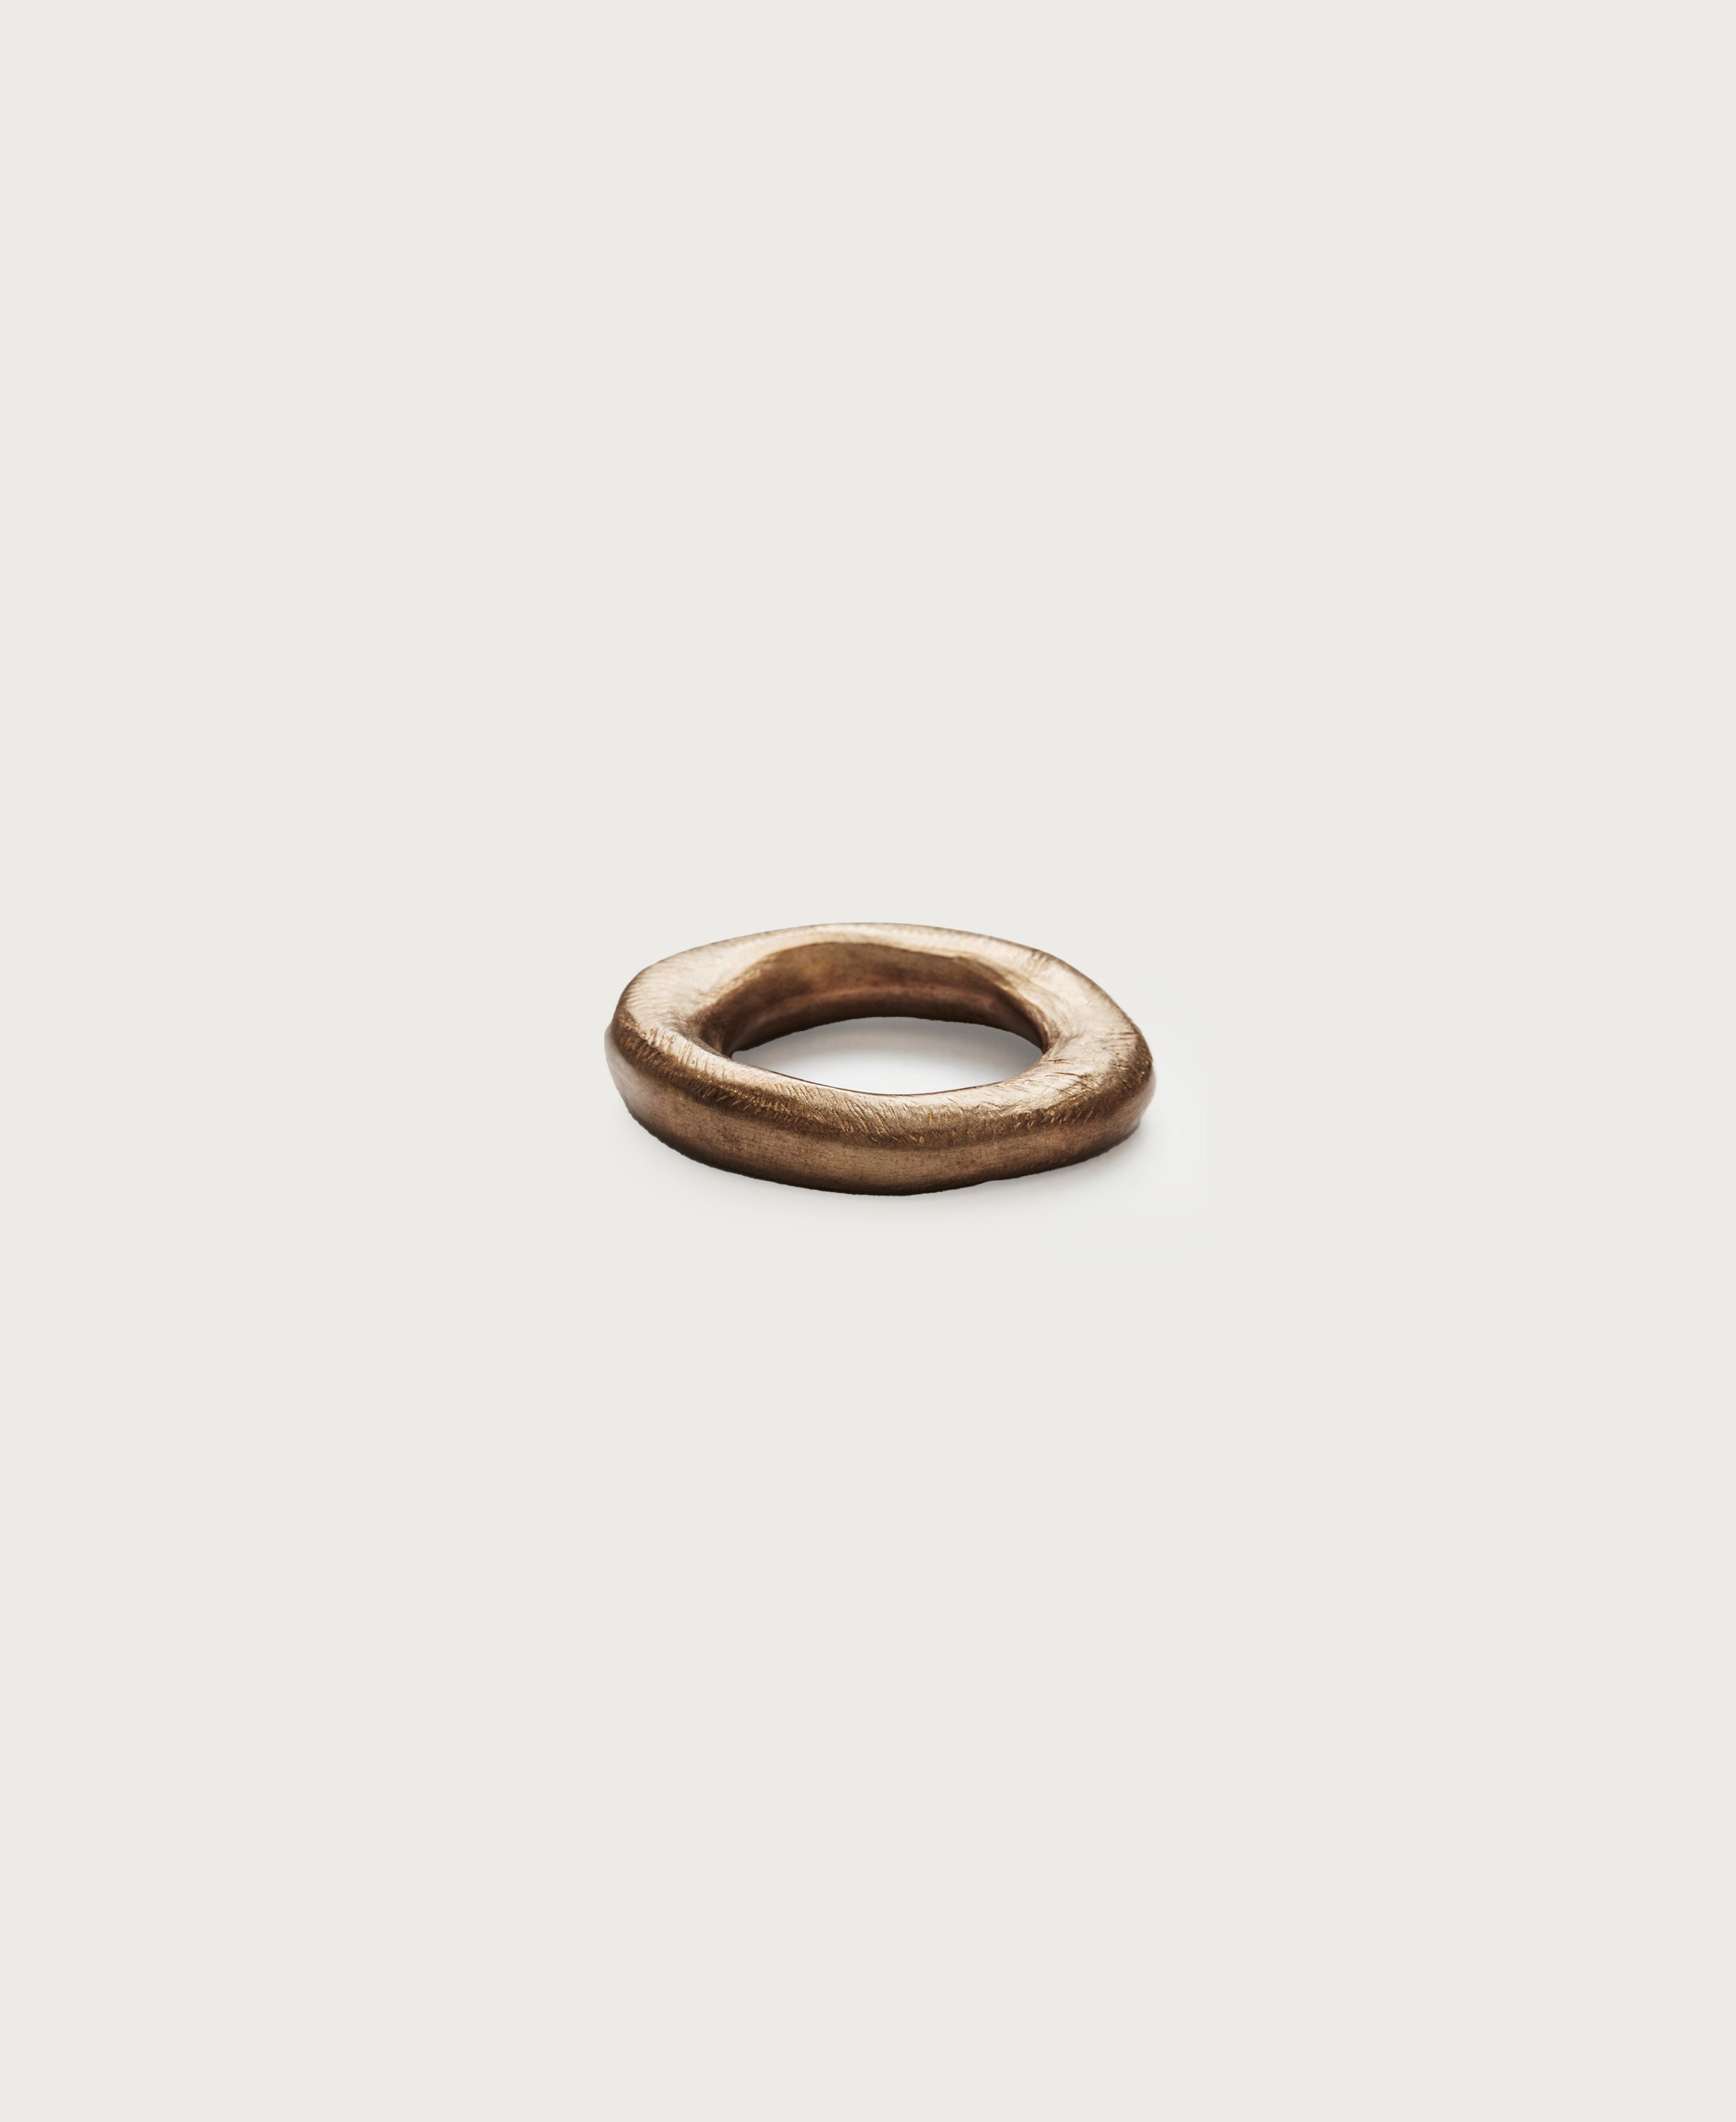   Bronze 'Buco' Napkin Rings - Set of 4  